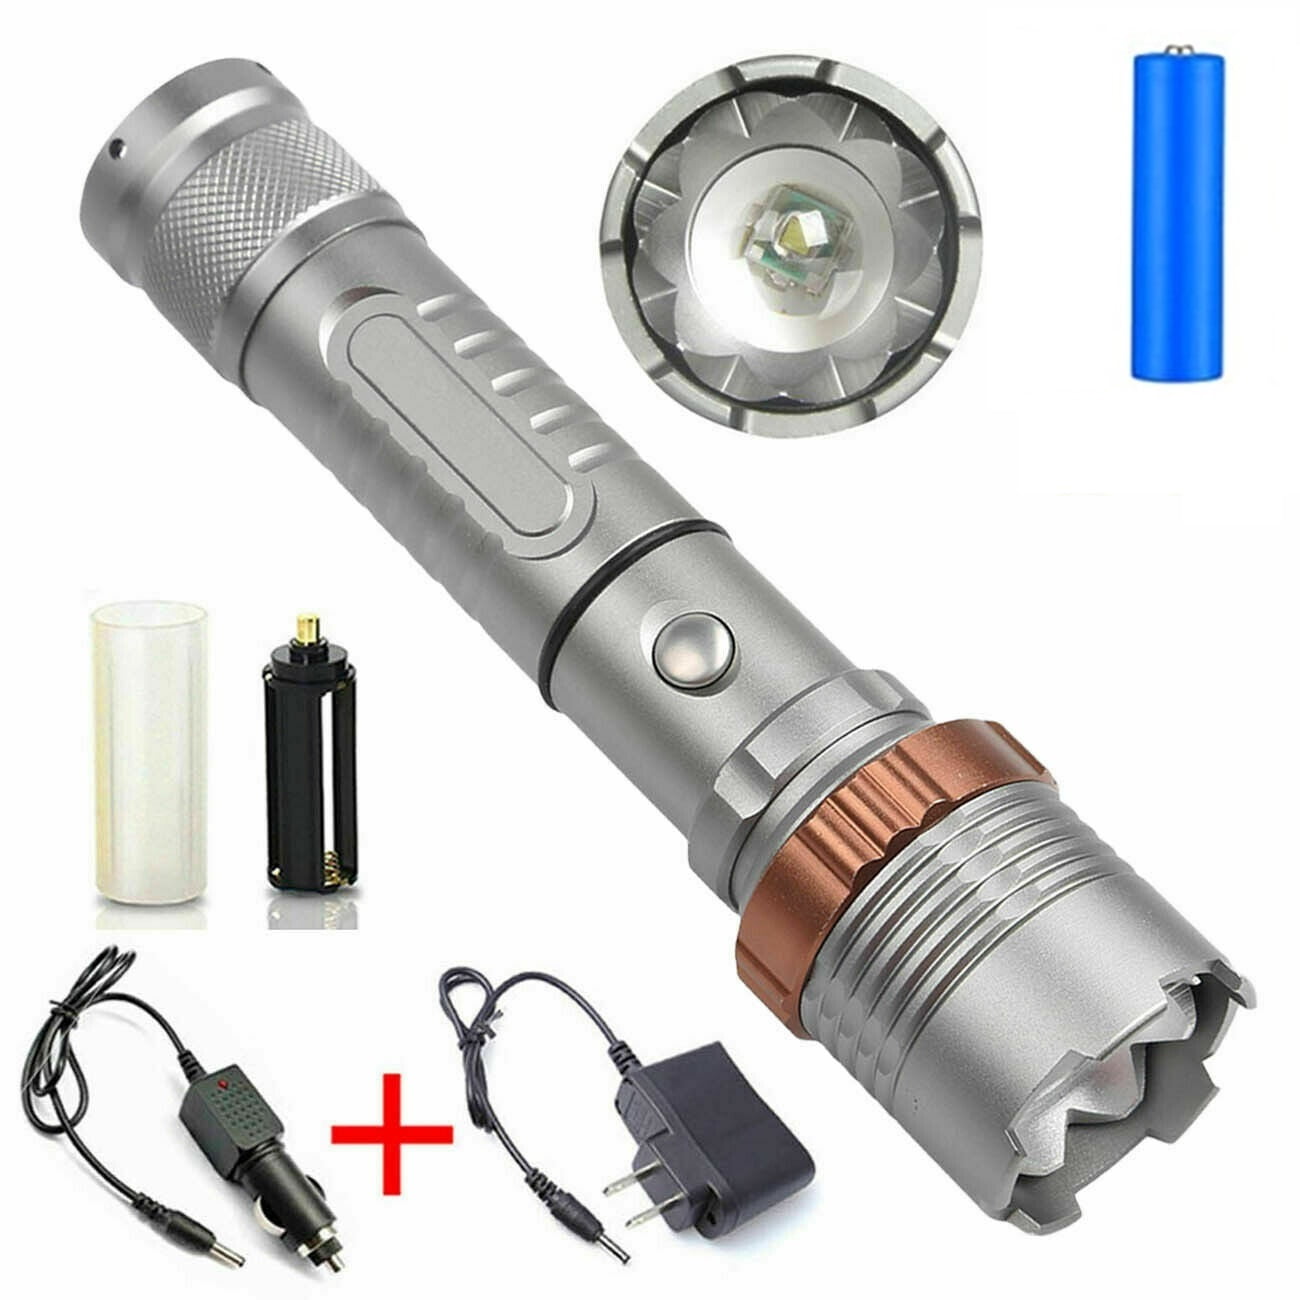 Pocket LED Torch Light Pen Clip Zoom Focus Shine Inspection Kit 